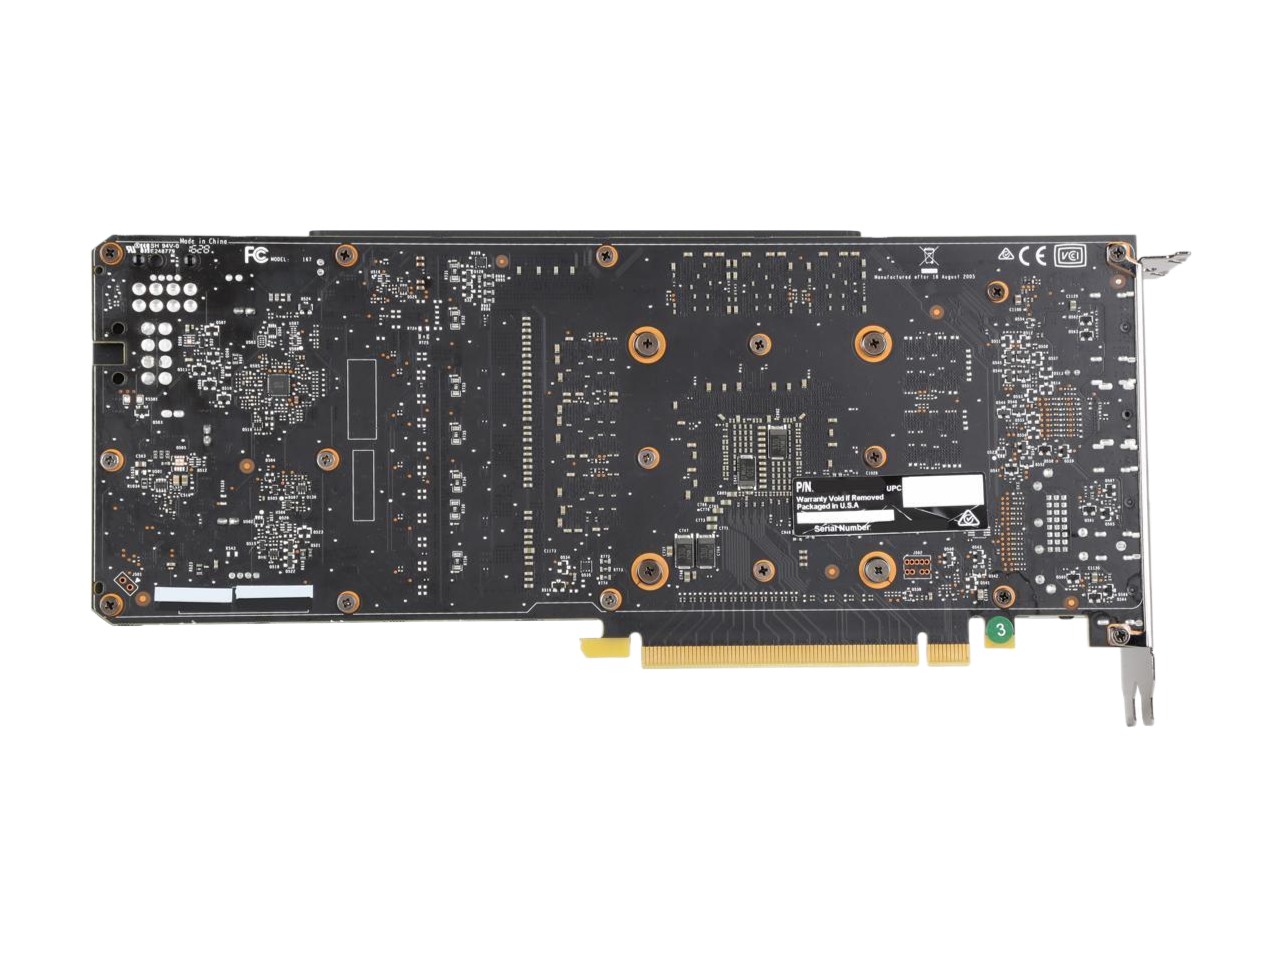 EVGA GeForce GTX 1060 6GB GAMING ACX 3.0, 6GB GDDR5, LED, DX12 OSD Support (PXOC) Graphics Card 06G-P4-6262-KR